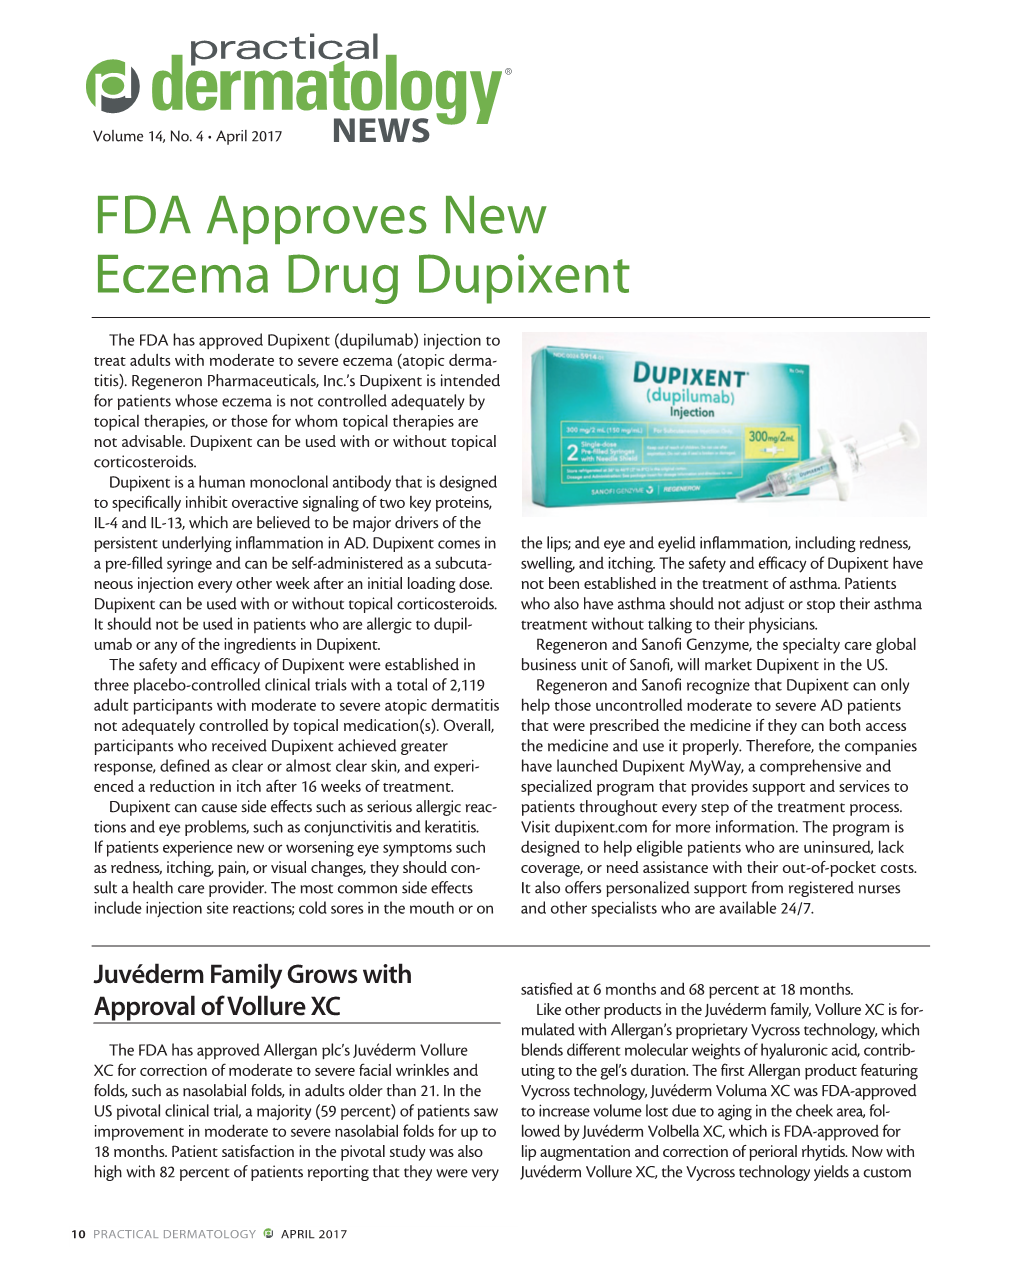 FDA Approves New Eczema Drug Dupixent